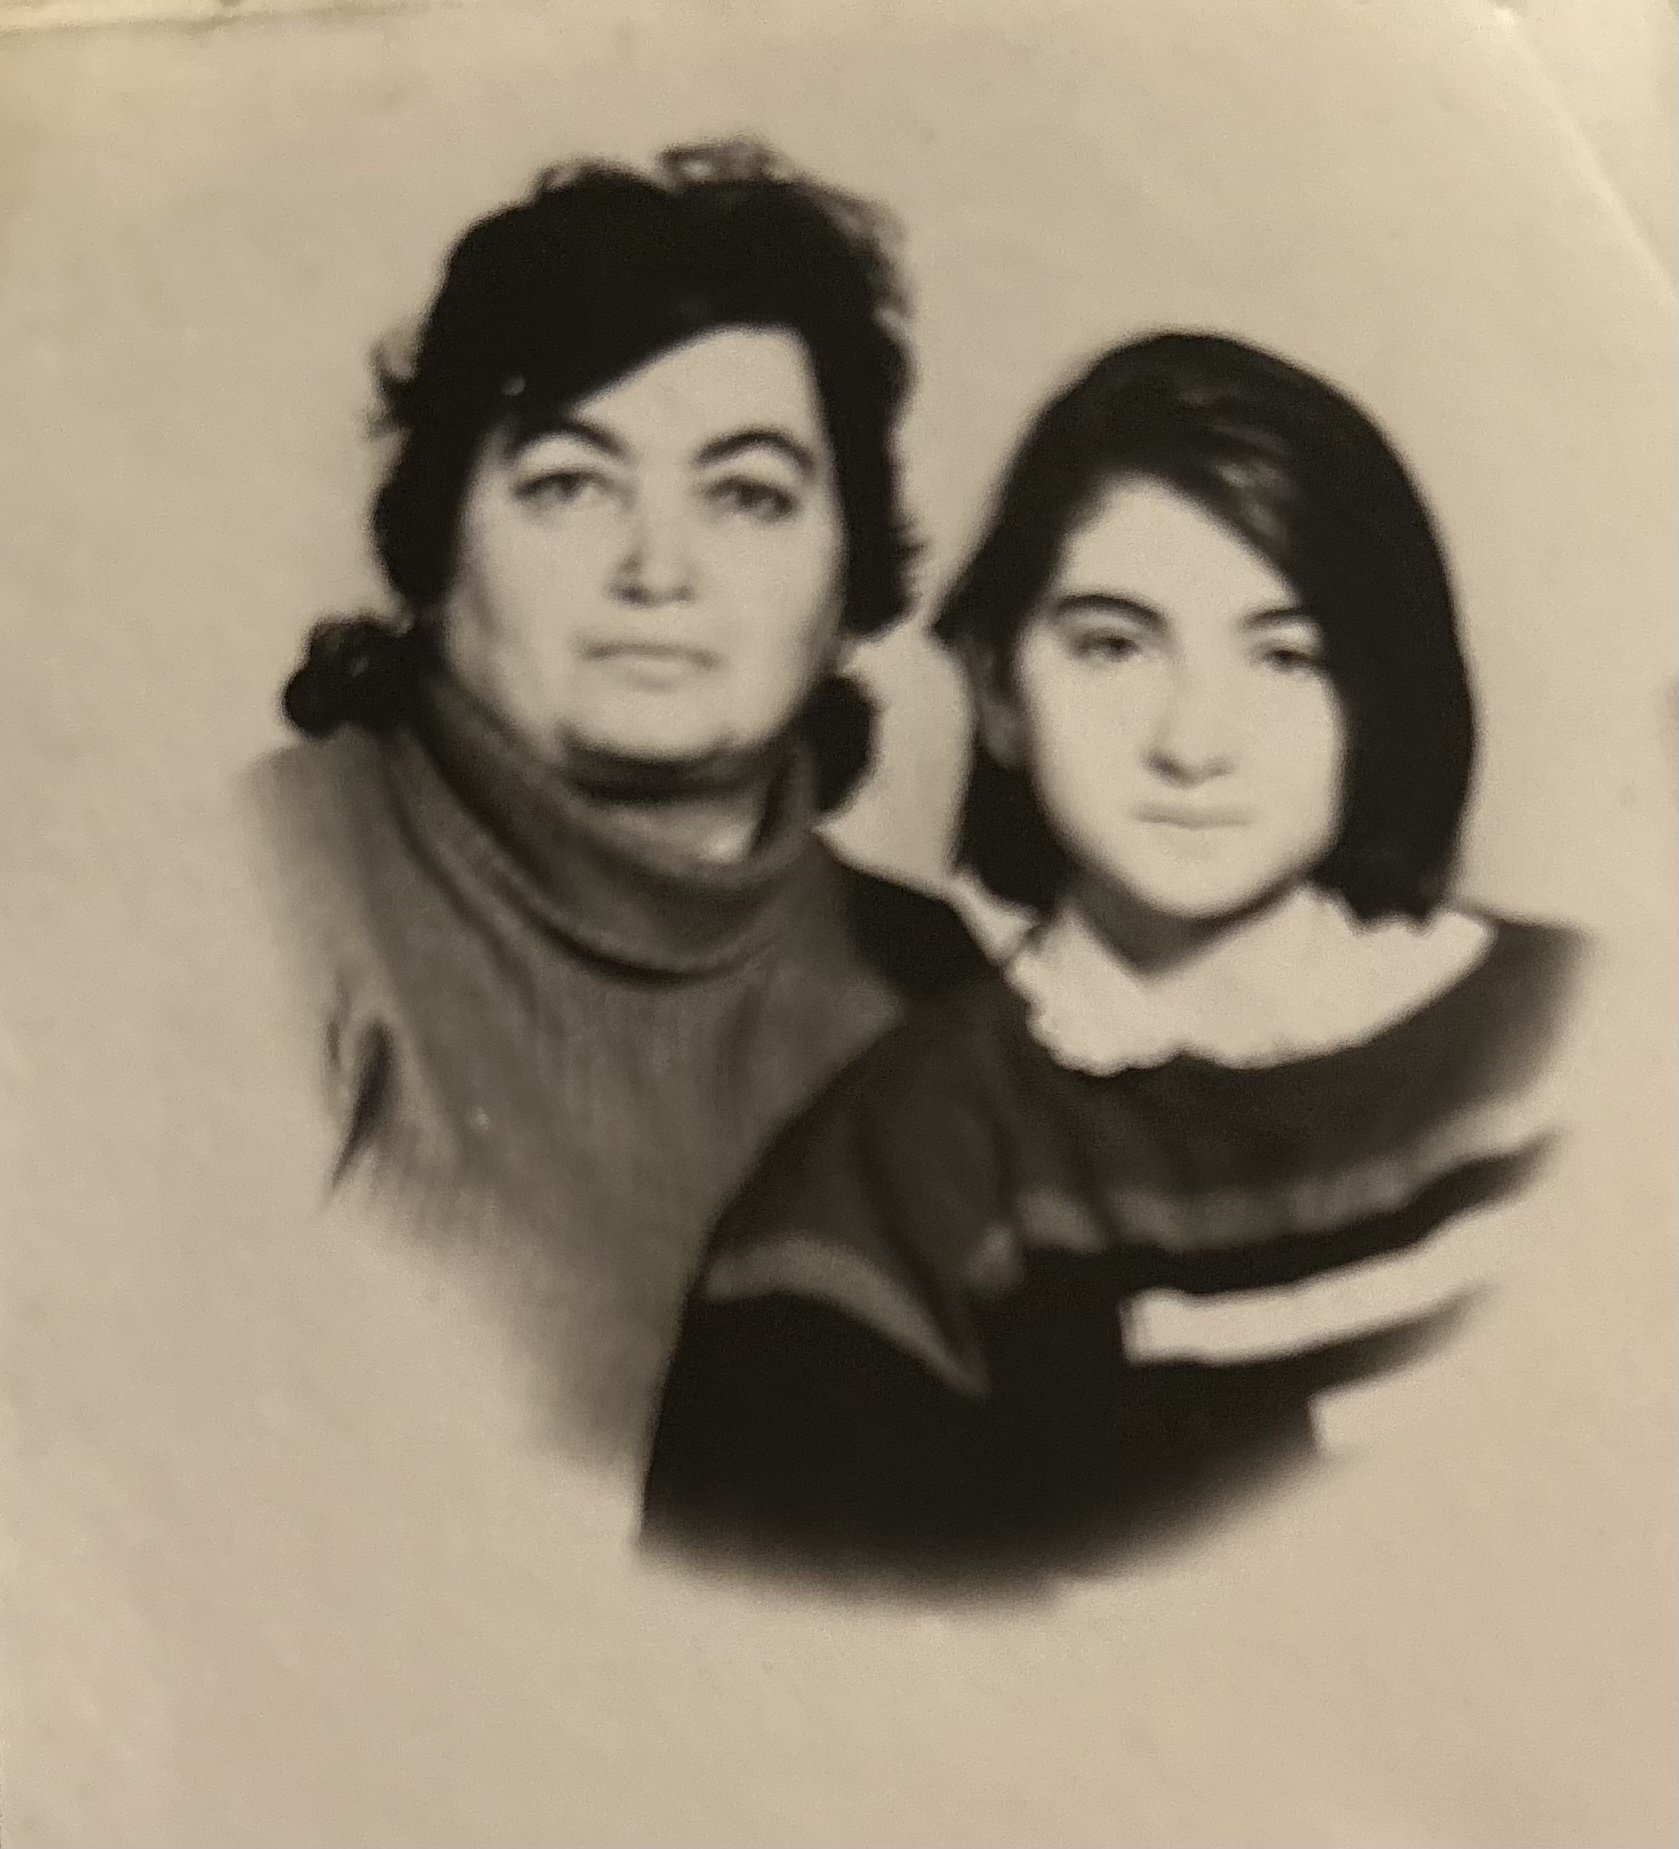    As I was a minor, I had to pose for visa photos alongside my mom. Circa 1993.   